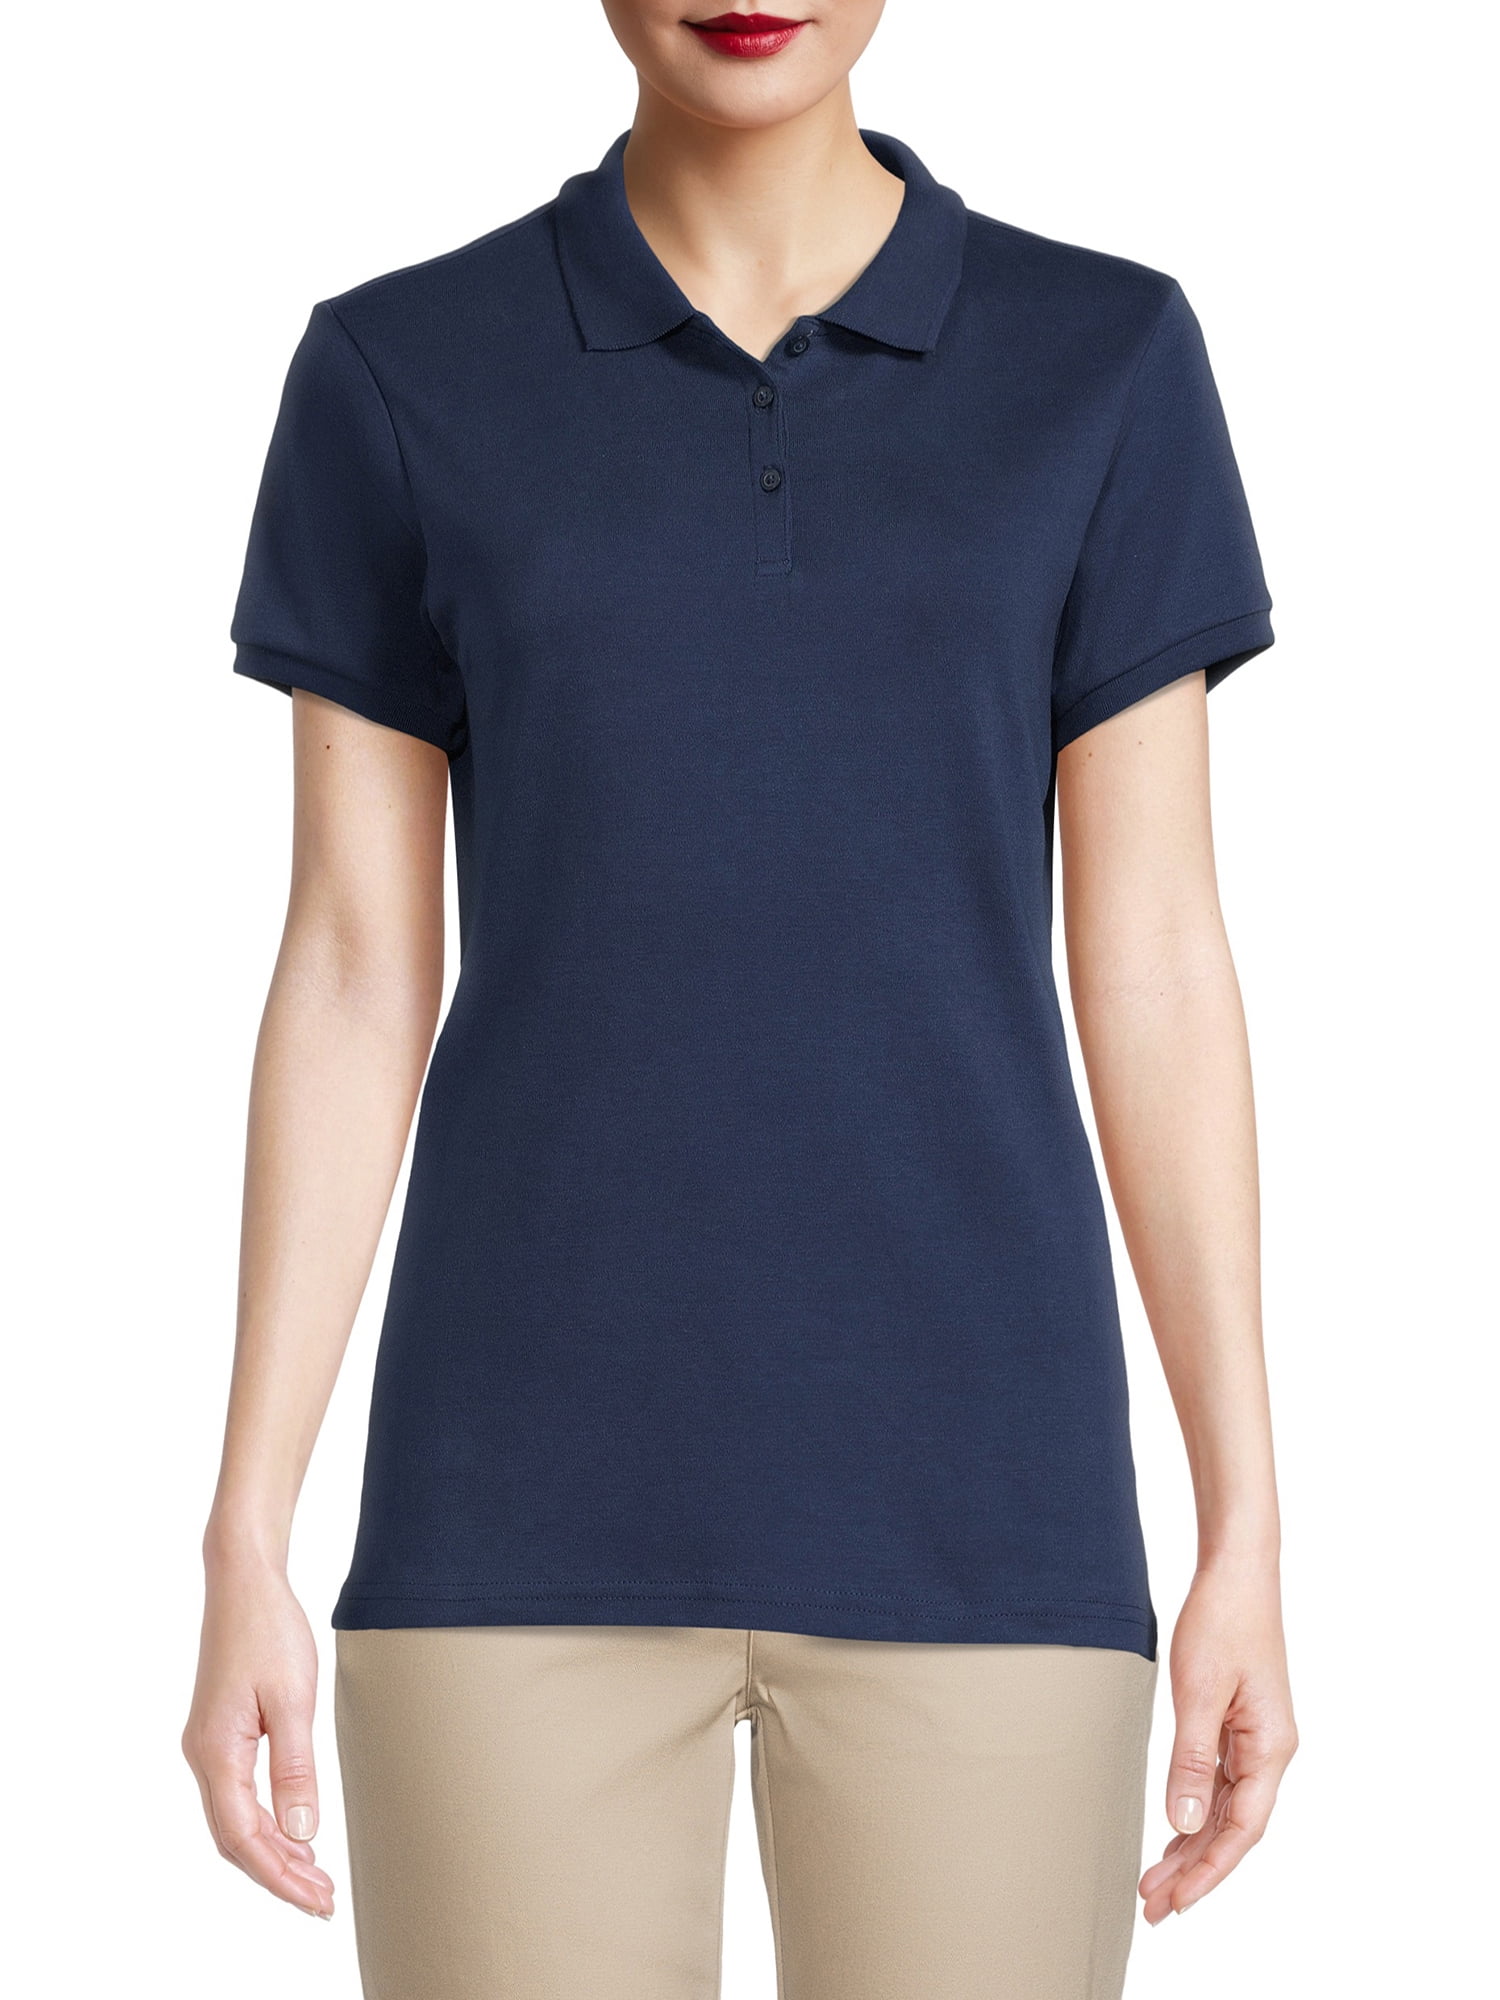 Specialist amount of sales quiet Wonder Nation Juniors School Uniform Polo Shirt with Short Sleeves -  Walmart.com